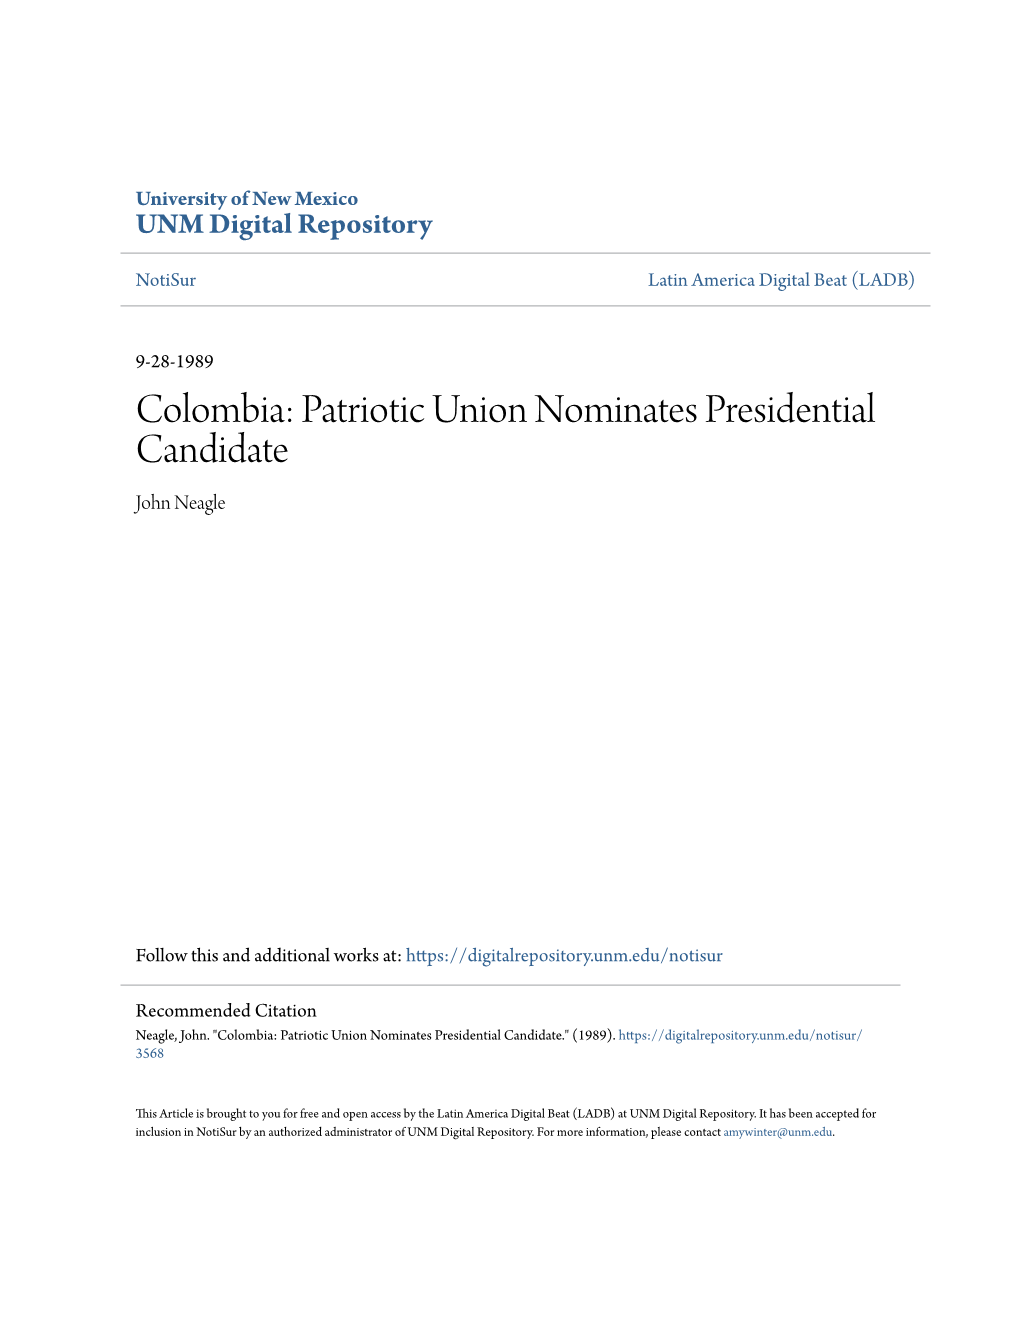 Colombia: Patriotic Union Nominates Presidential Candidate John Neagle